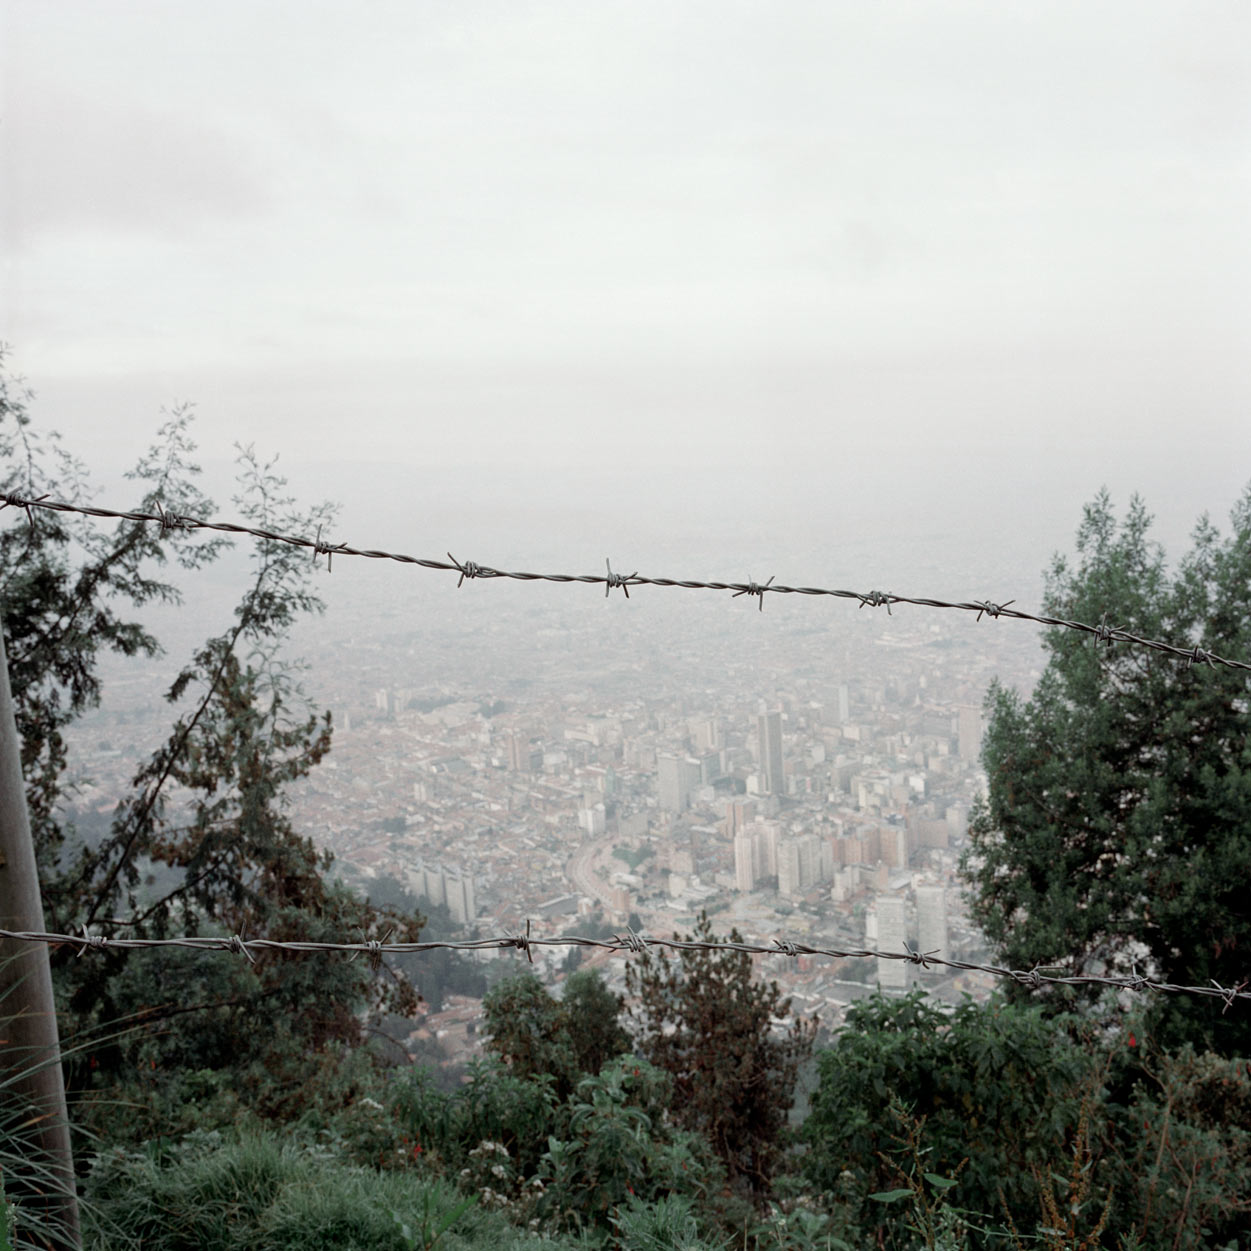 Alec Soth — Dog Days Bogotá